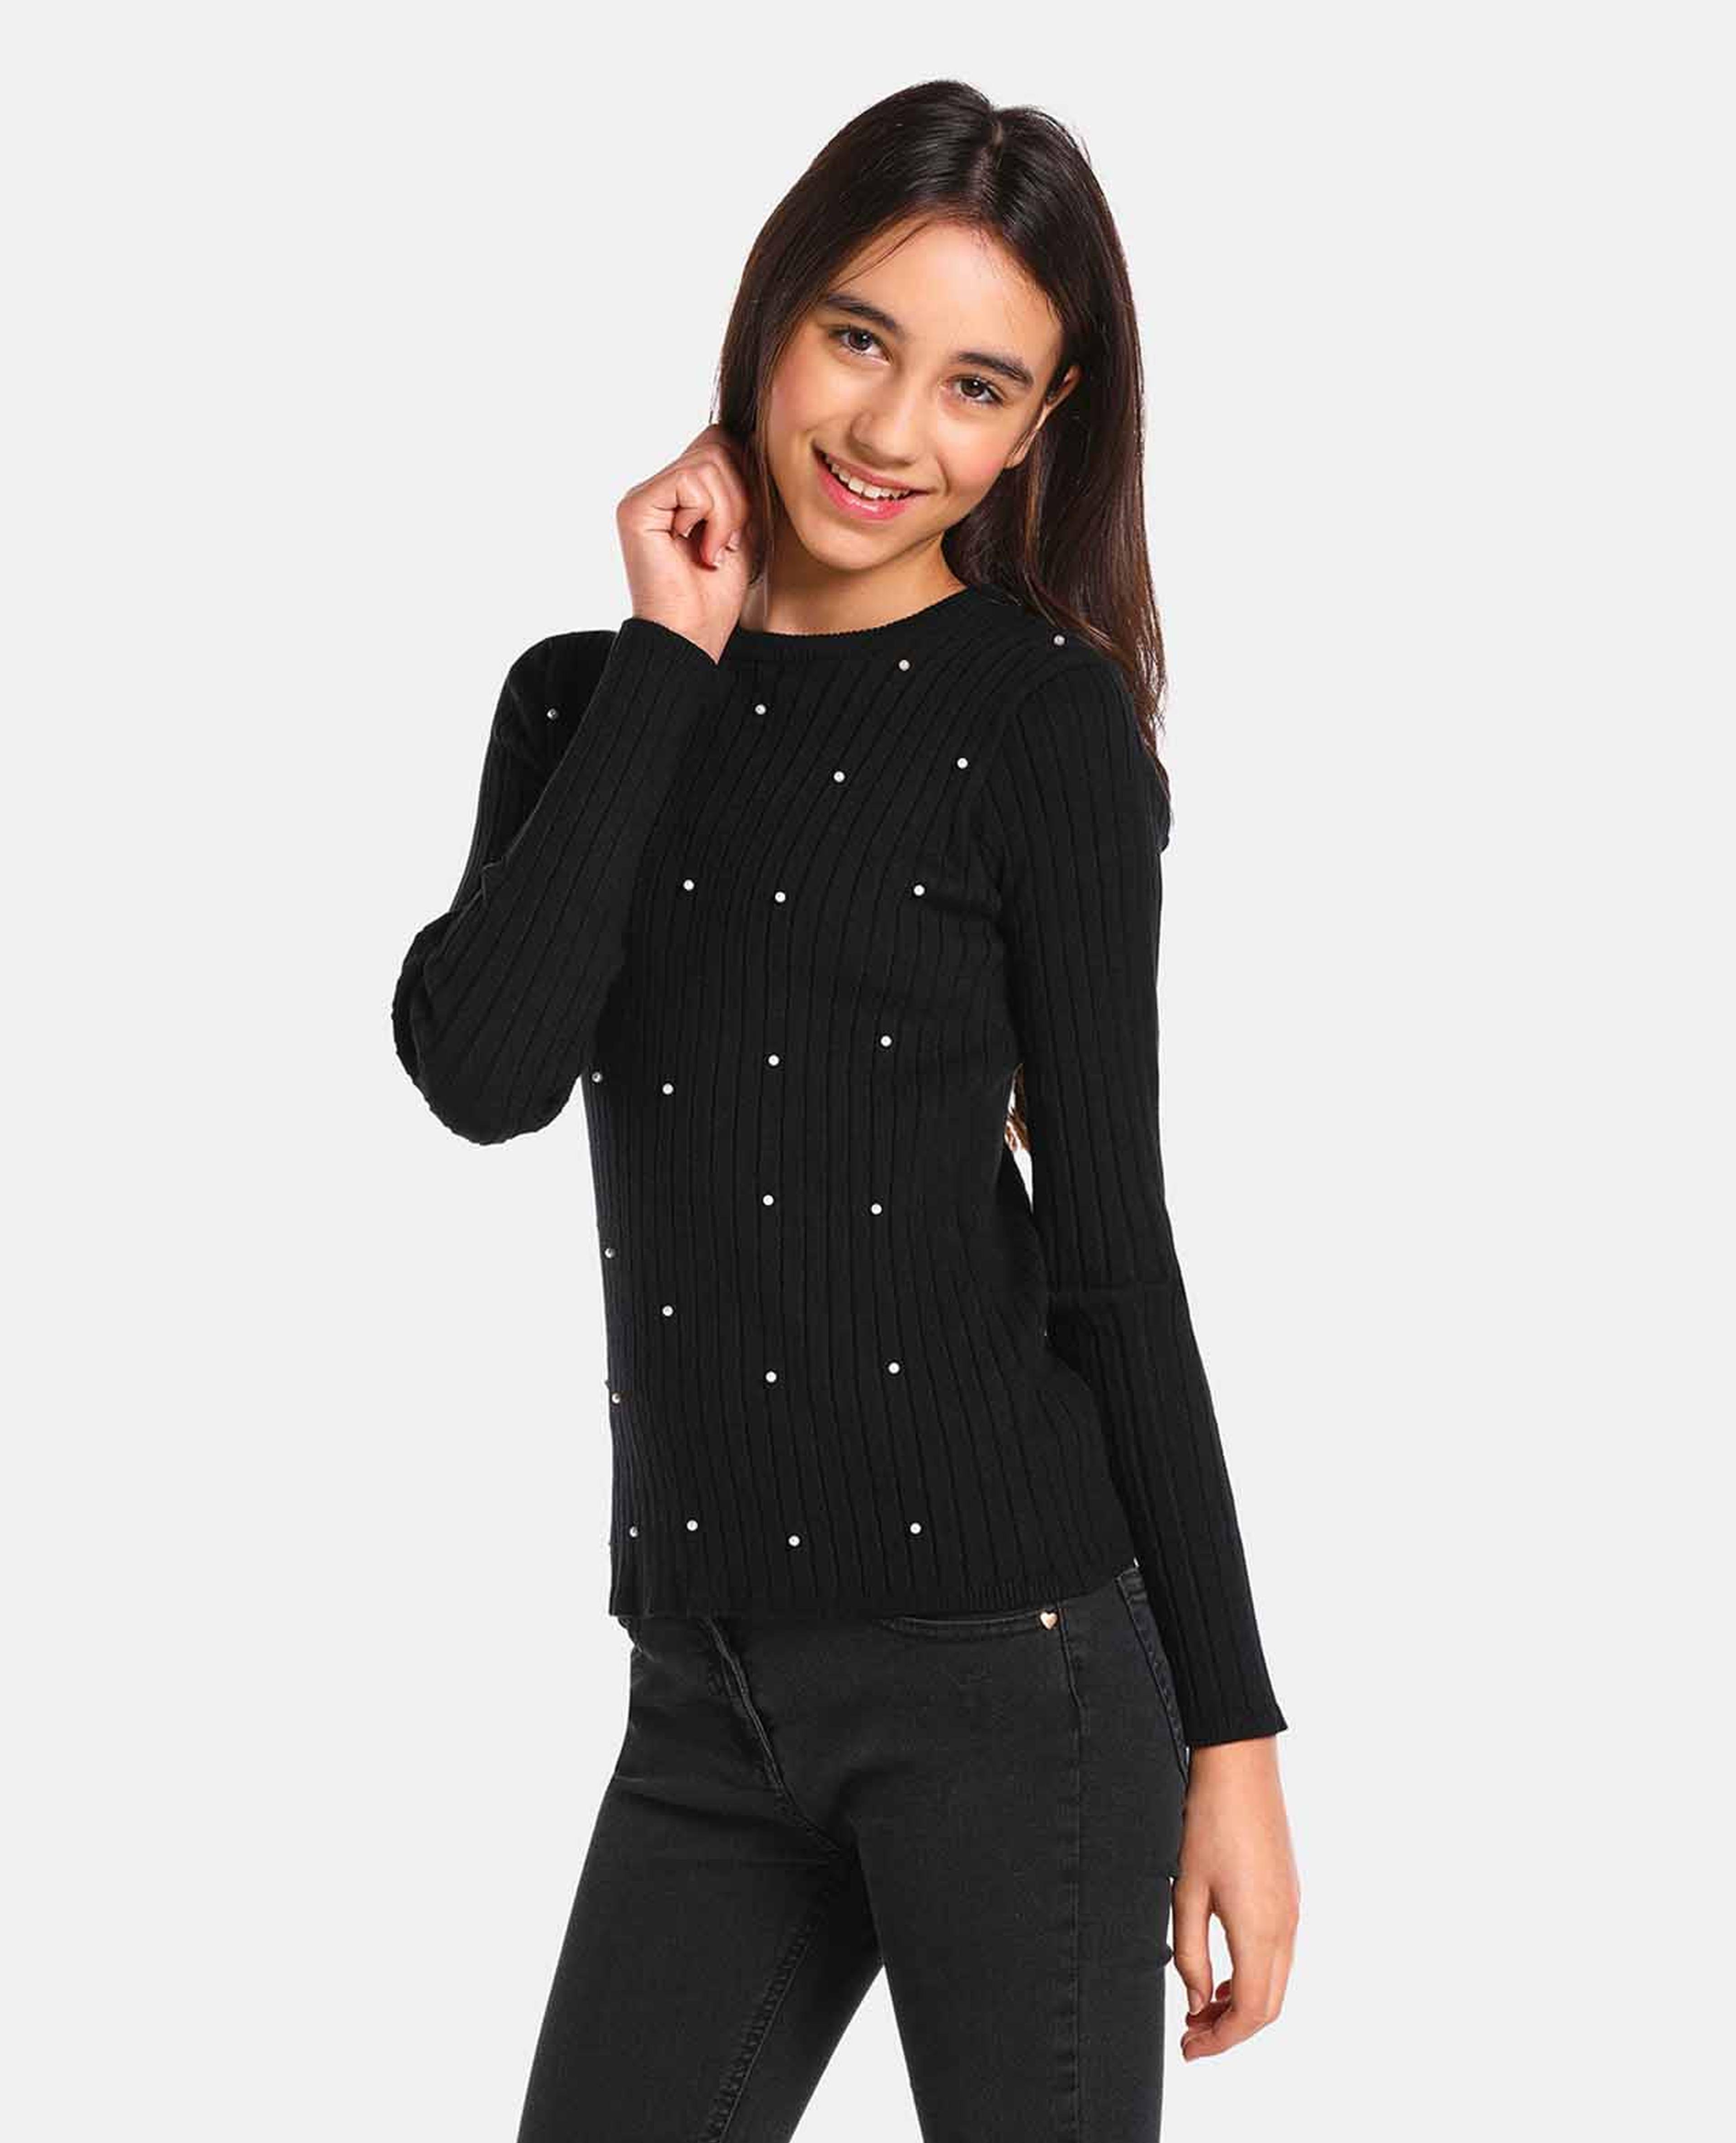 Black Cotton Casual Sweater